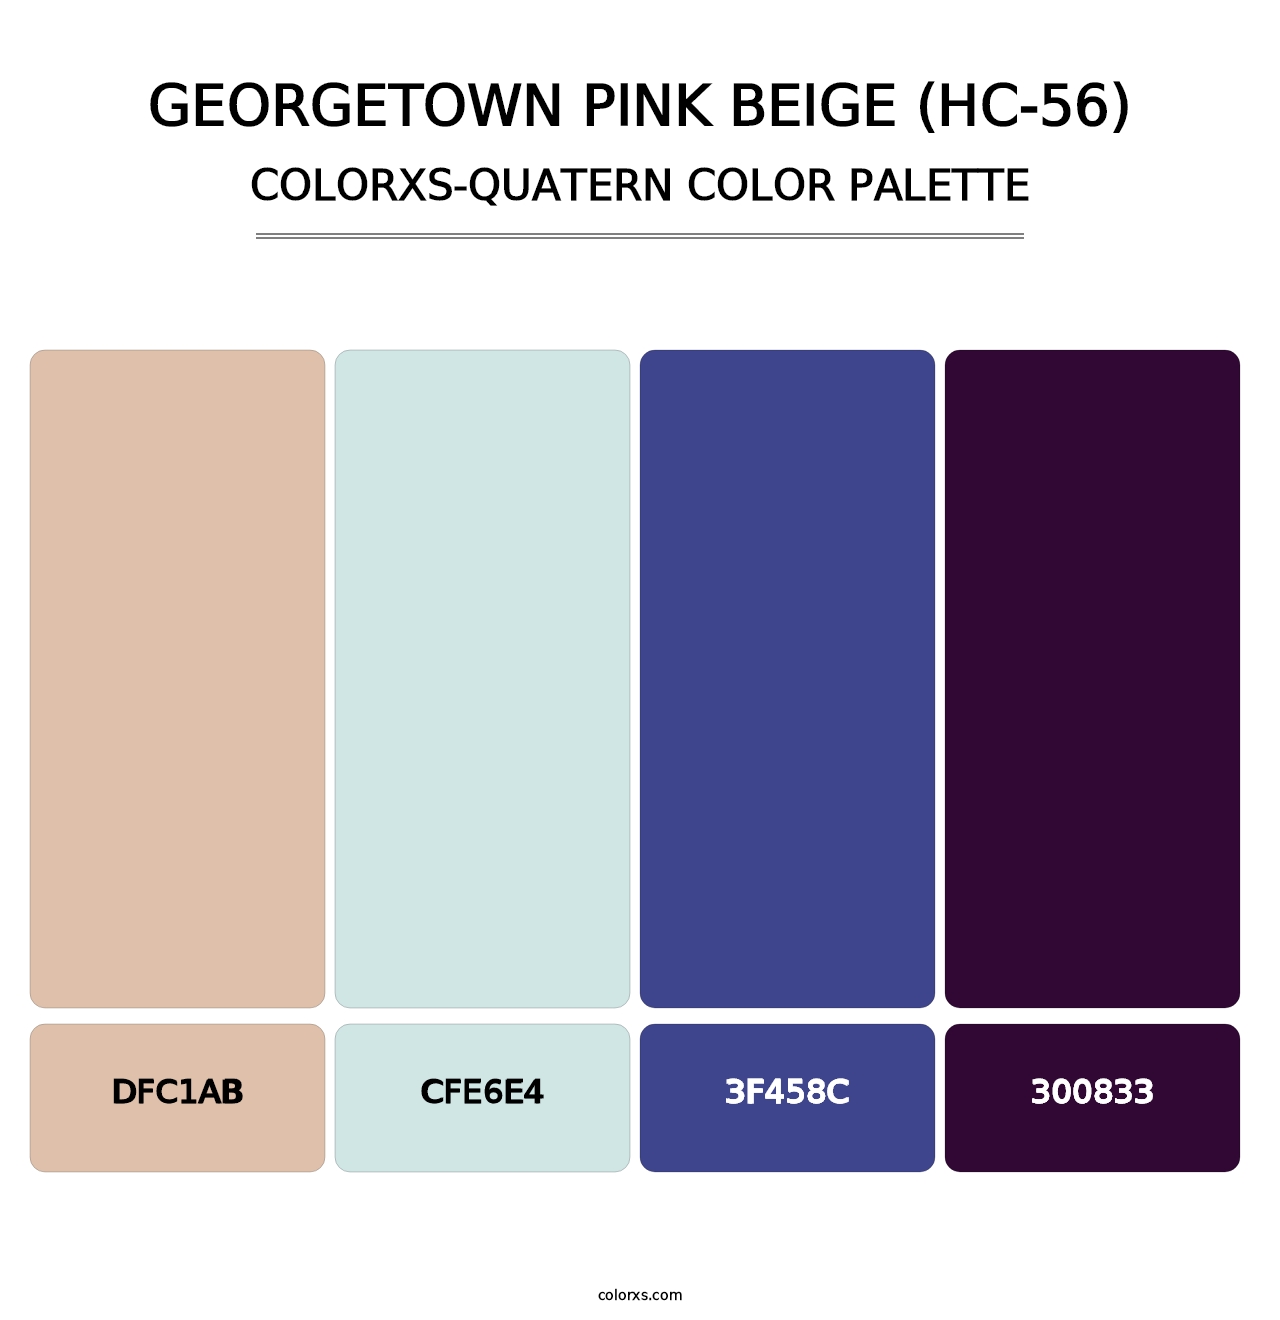 Georgetown Pink Beige (HC-56) - Colorxs Quatern Palette